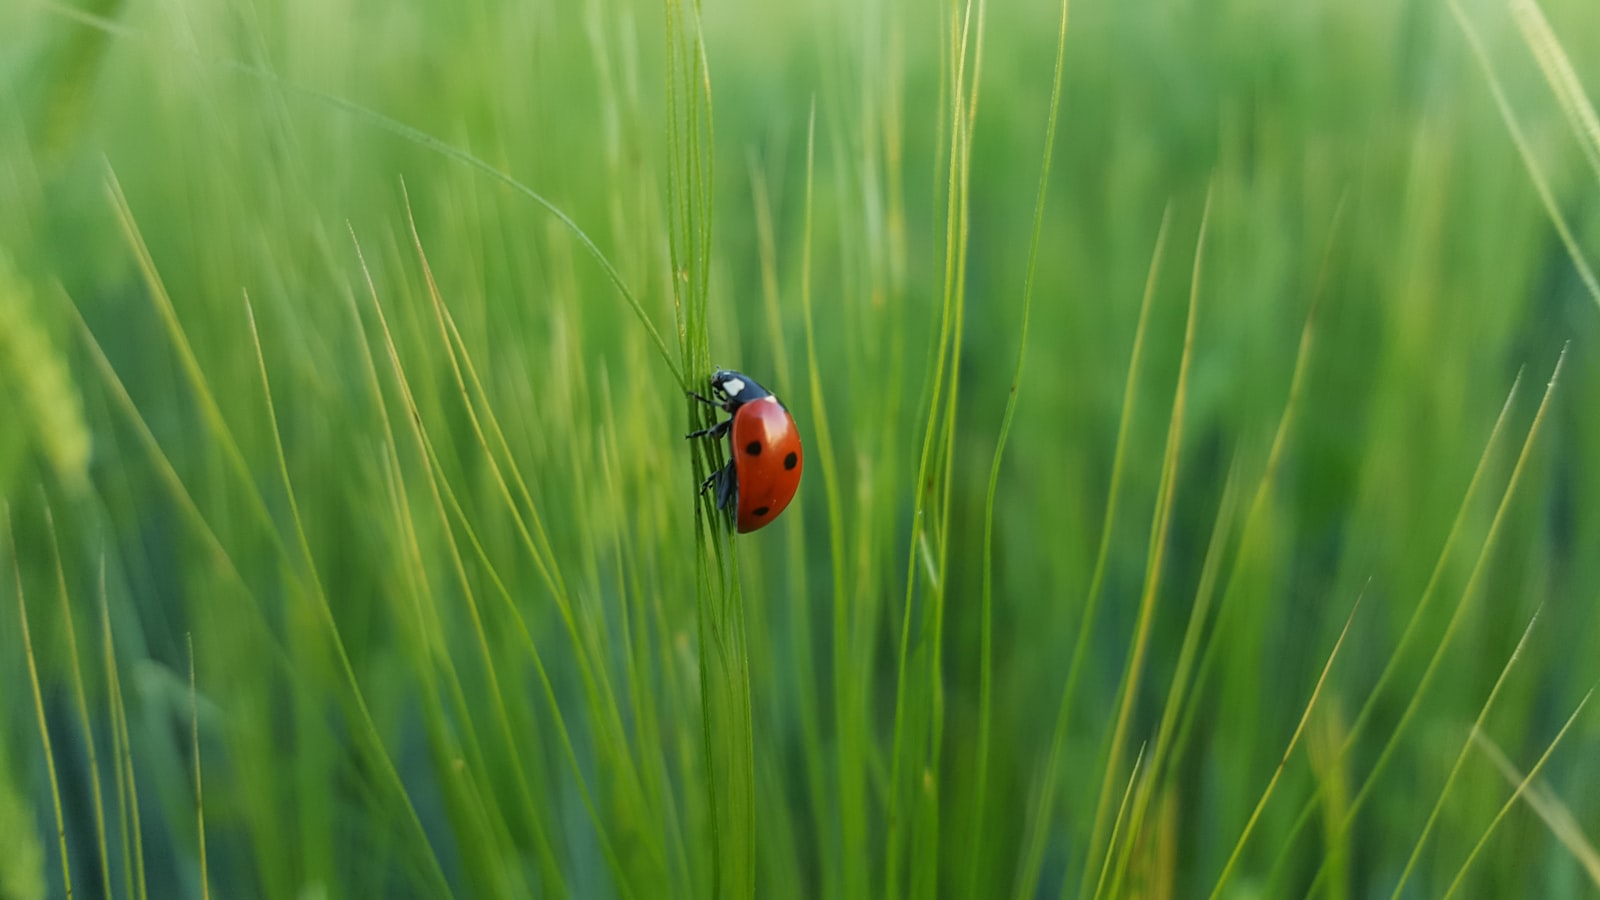 Samsung Galaxy S6 sample photo. Ladybug on green grass photography